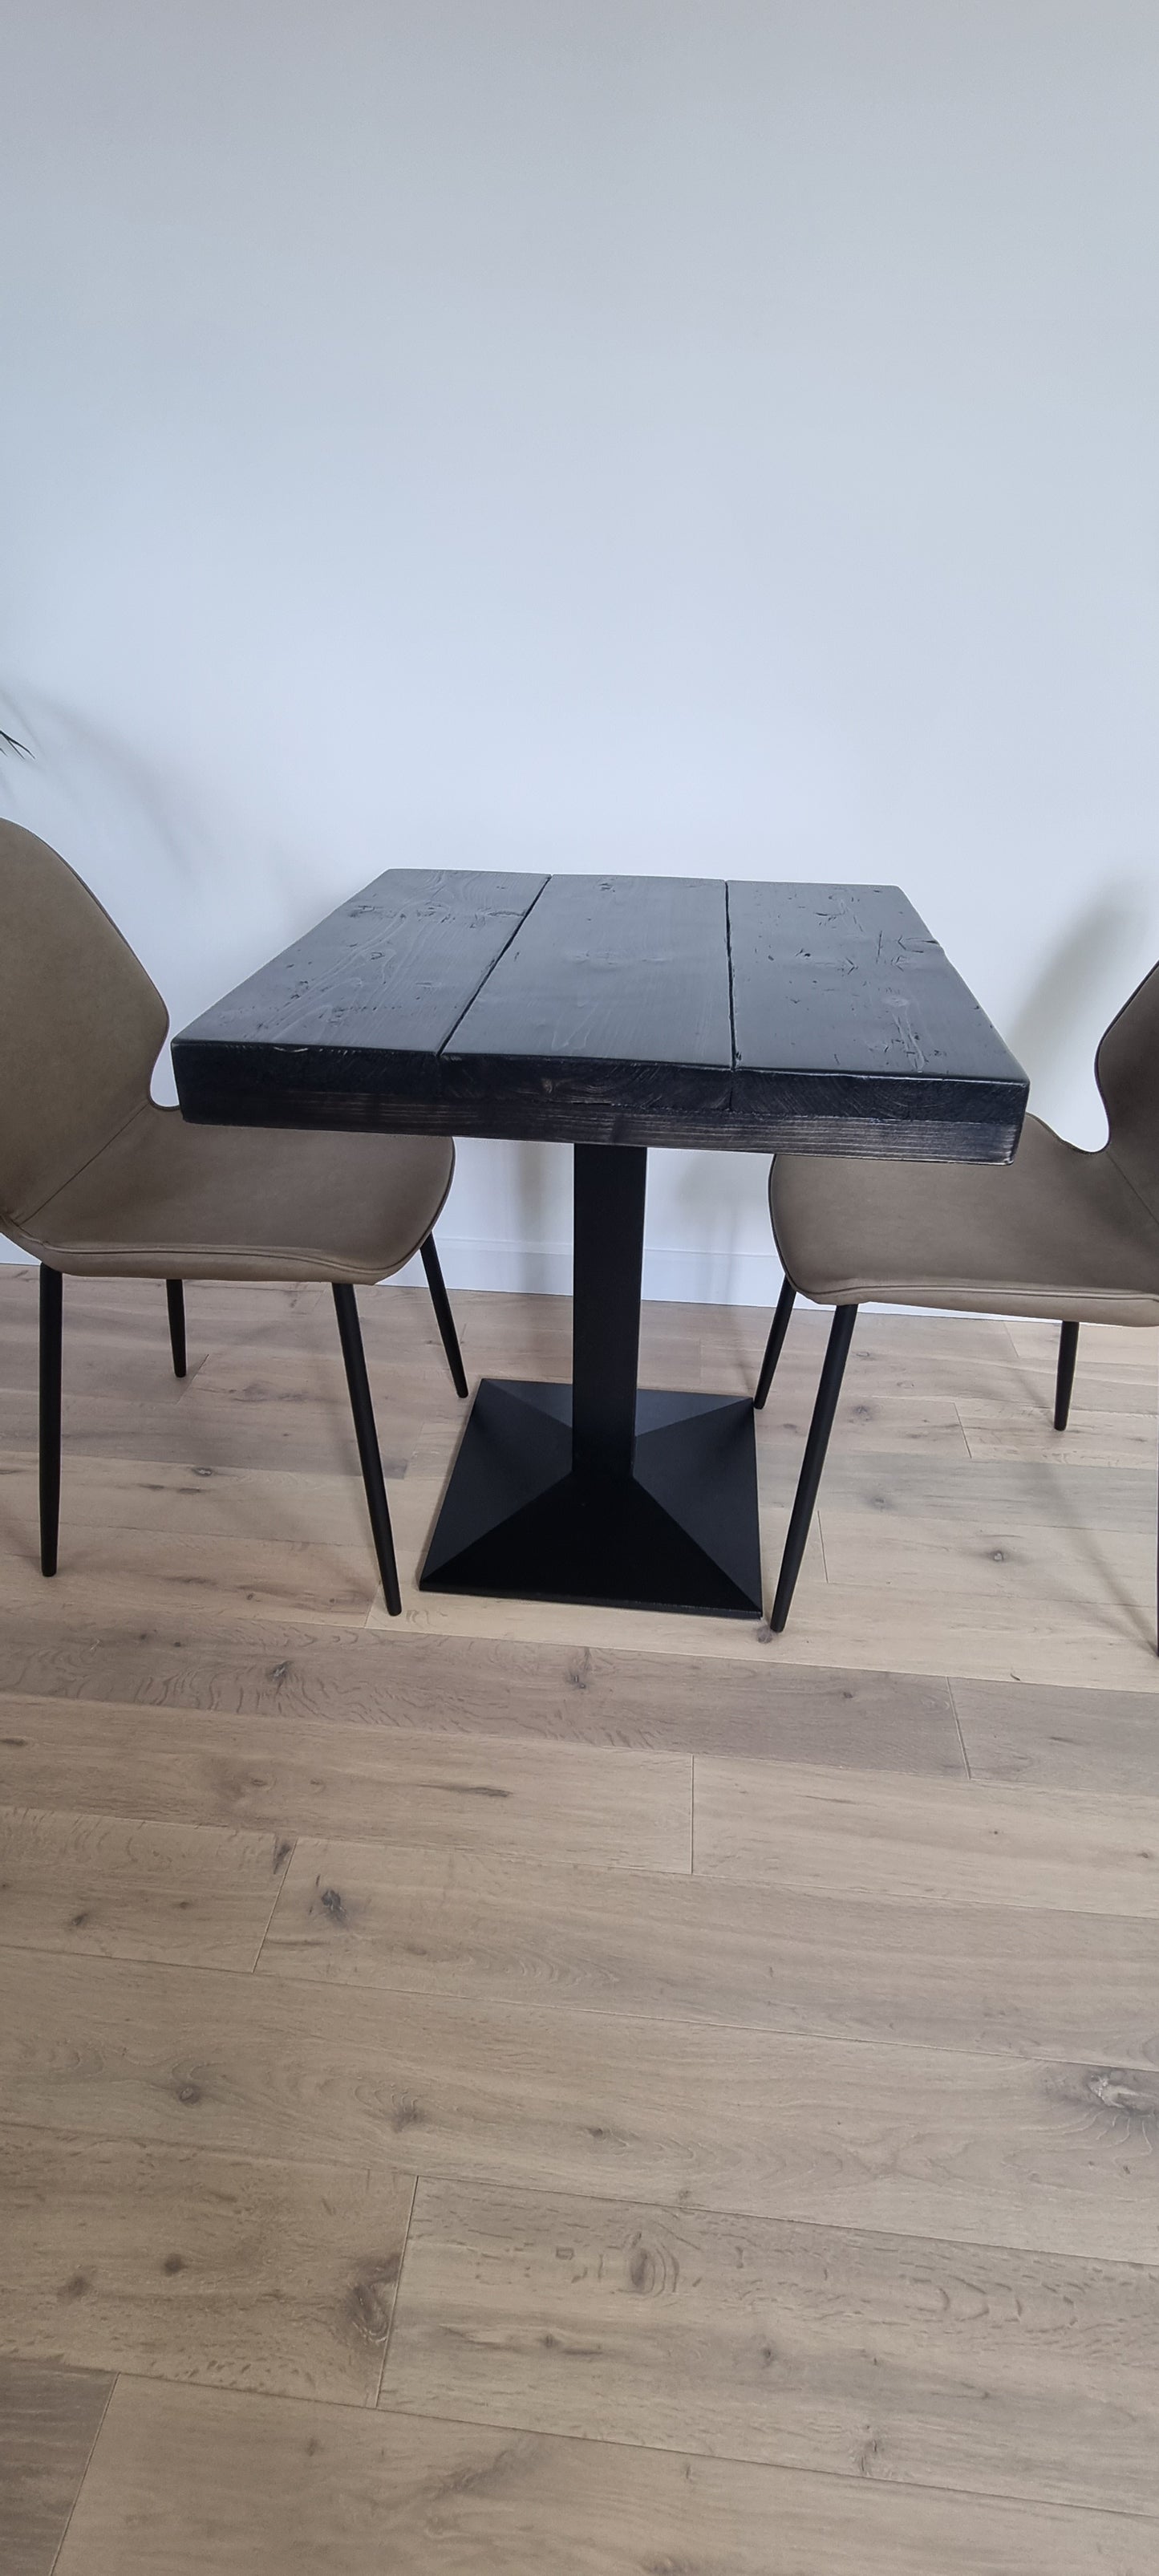 Bistro square table with cast iron pedestal leg